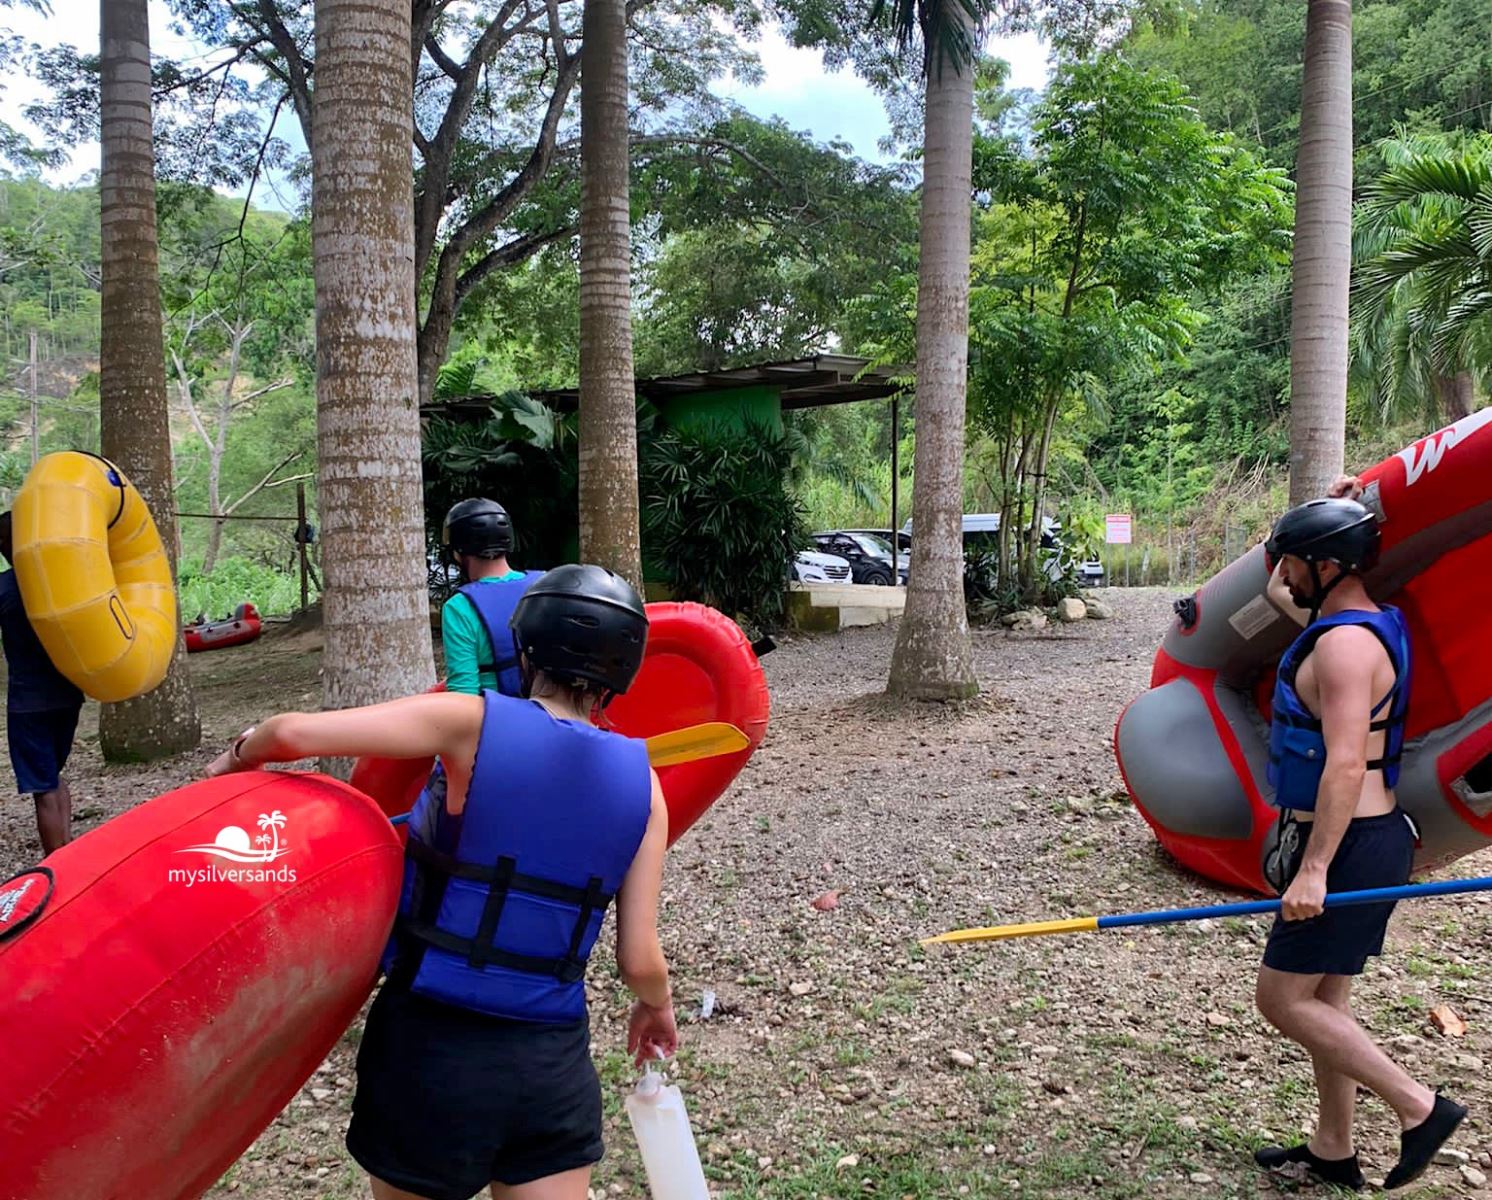 choosing tubes or kayaks